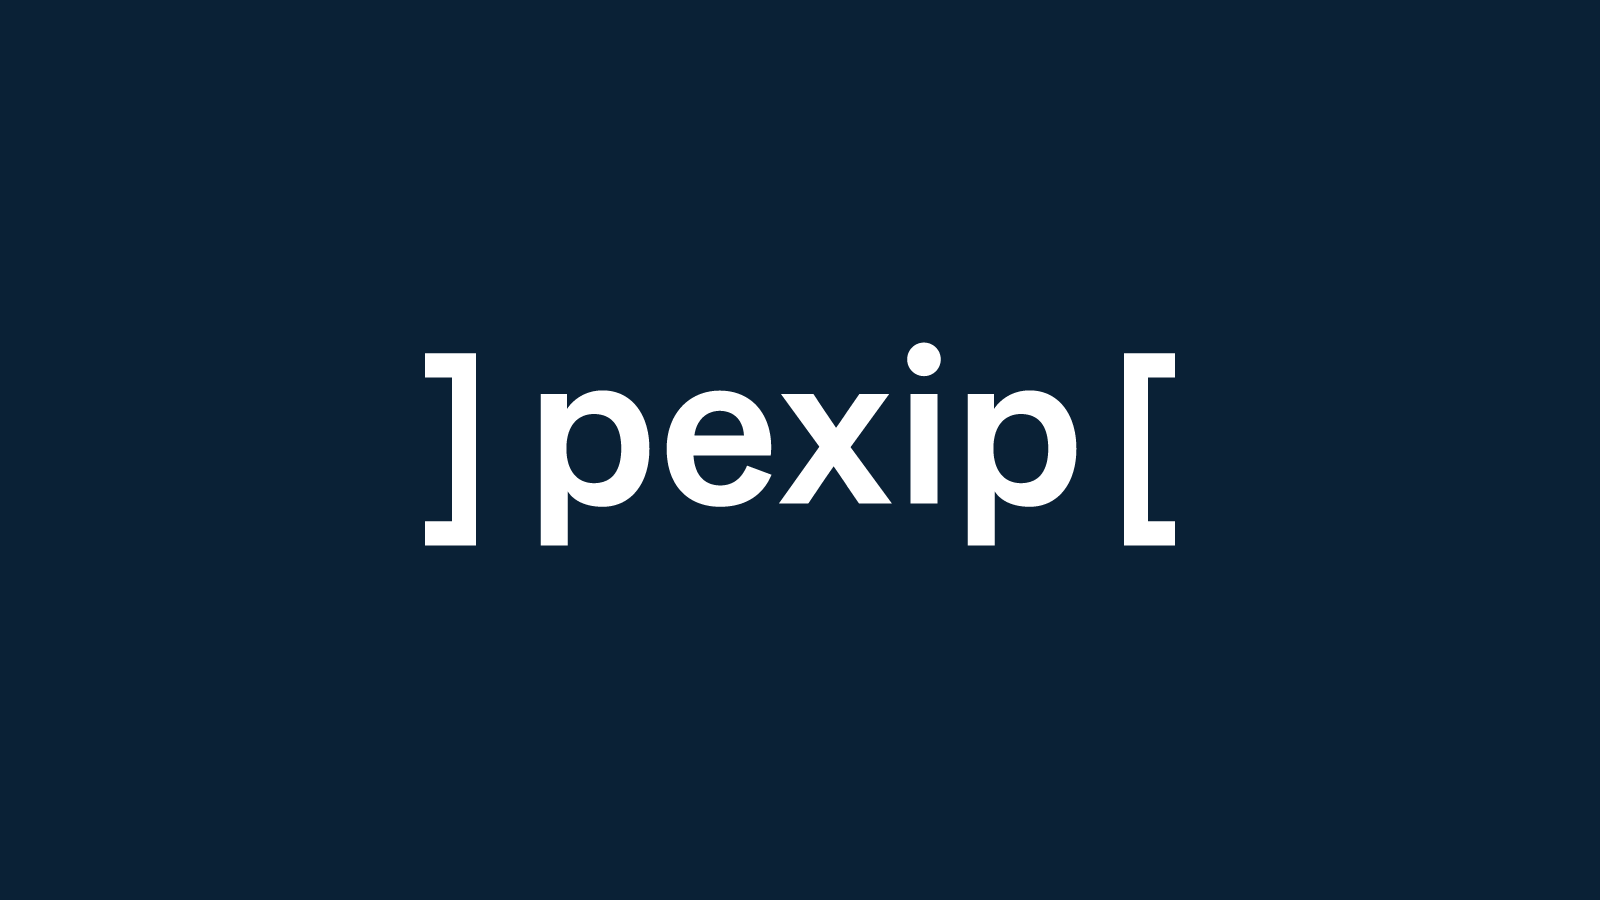 Pexip negative watermark logo